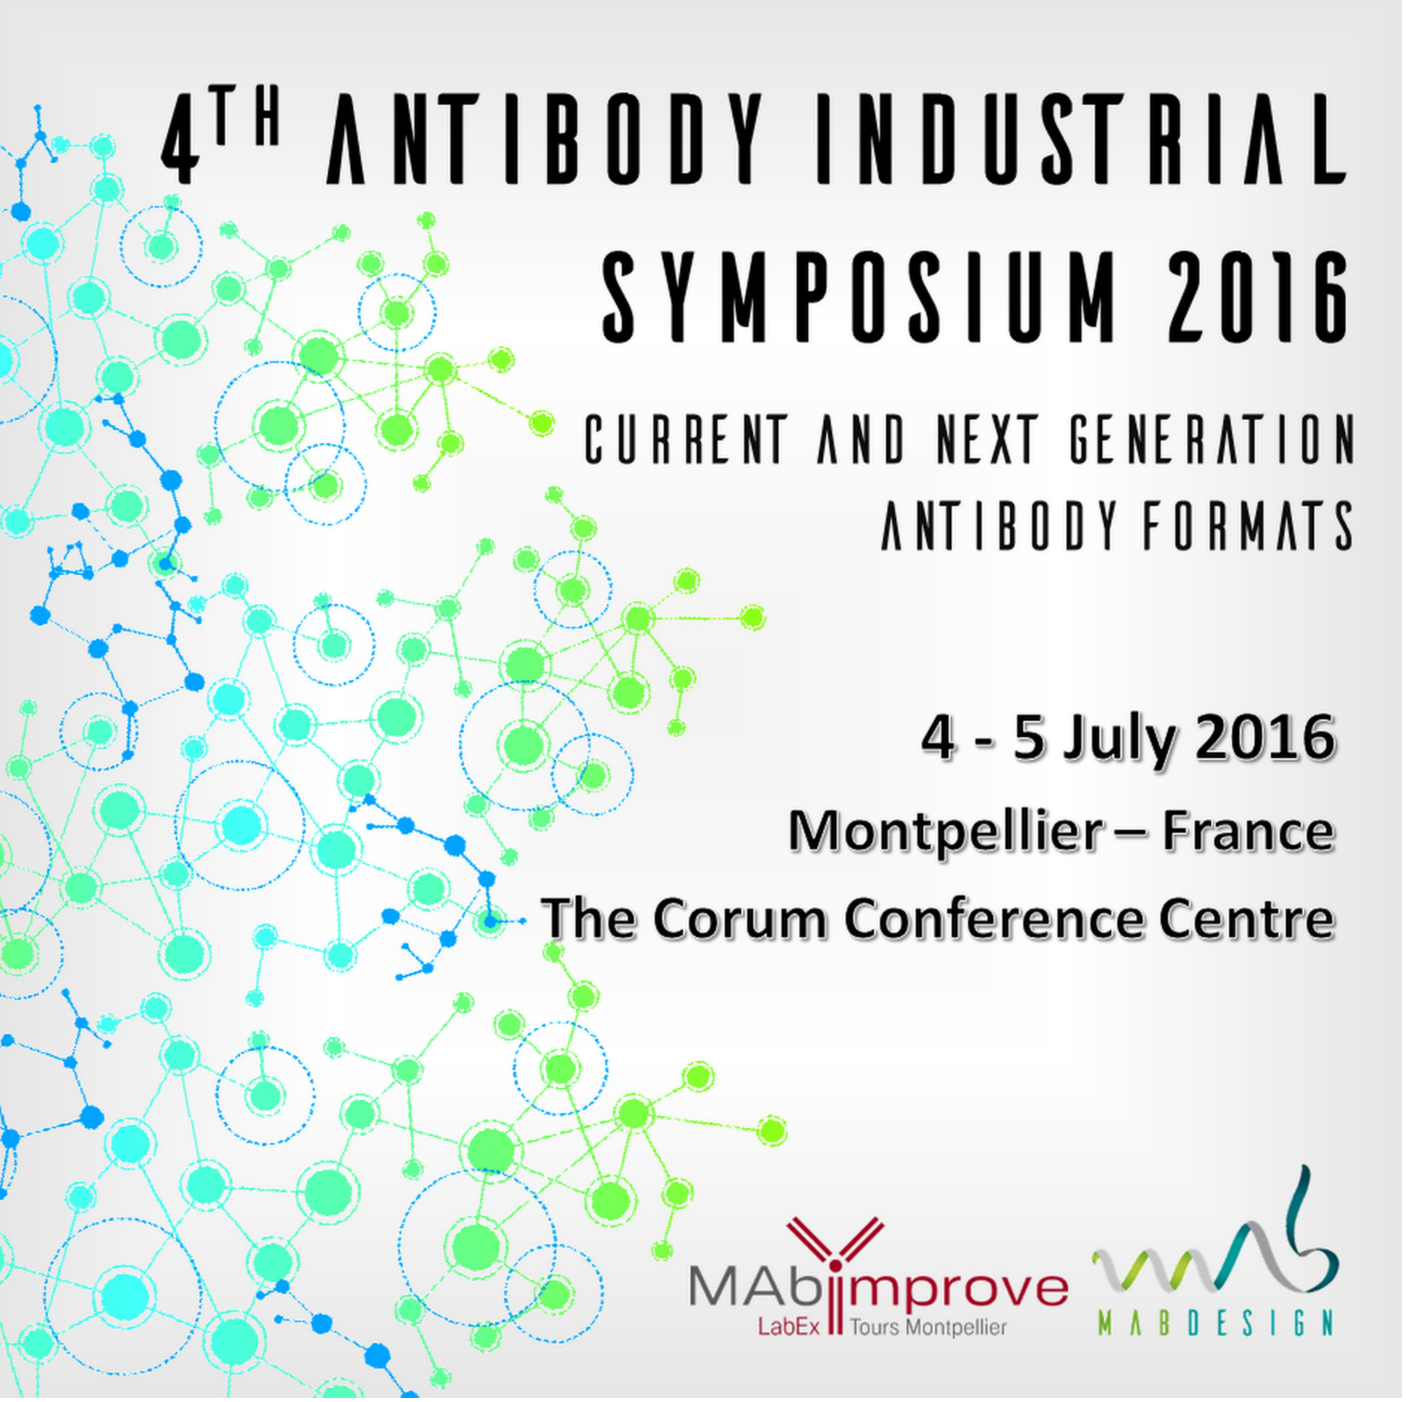 4th antibody industrial symposium 2016